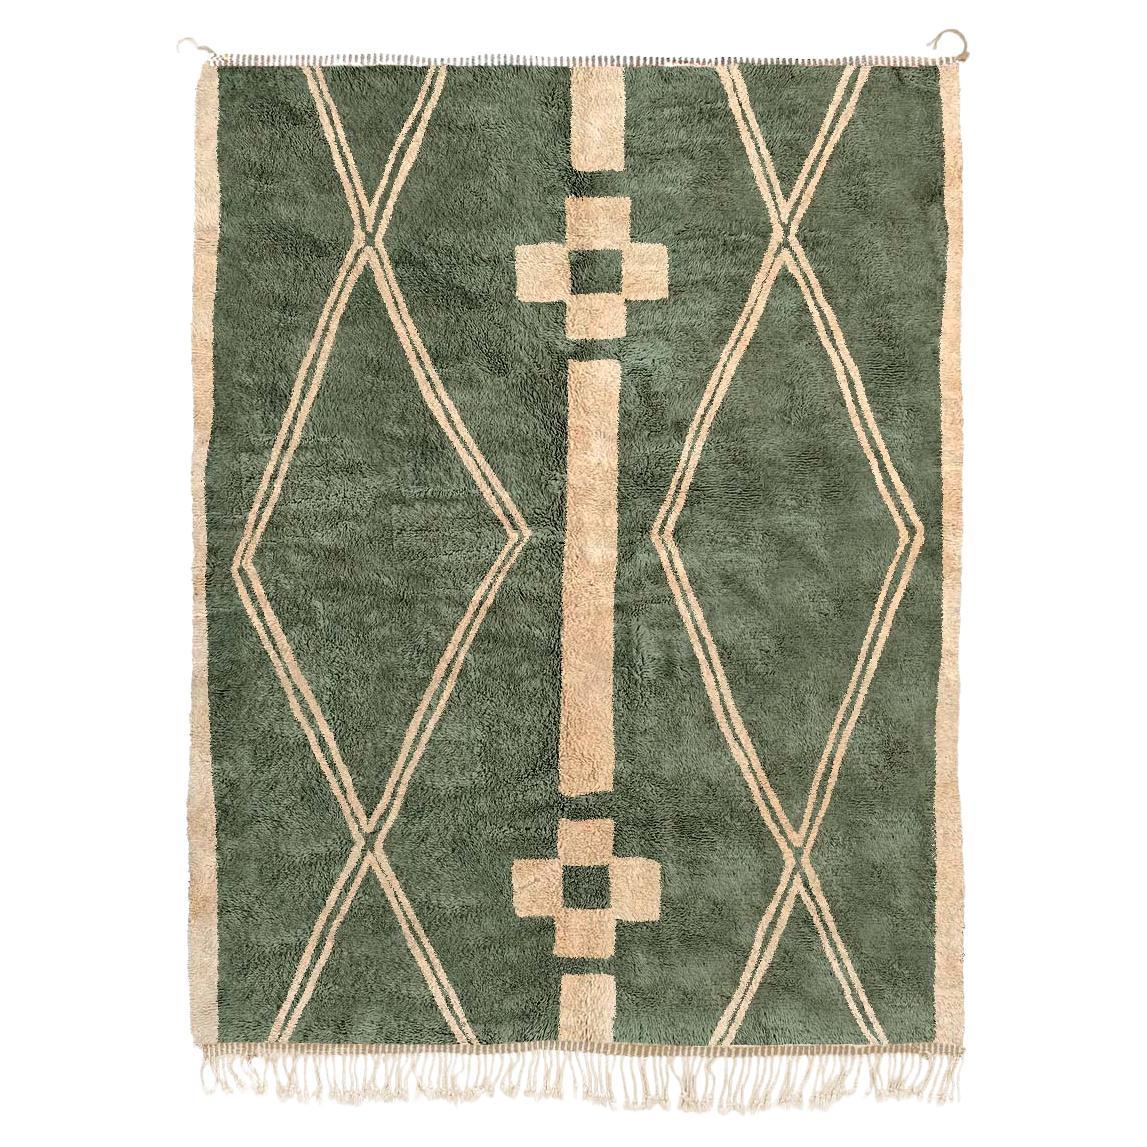 Tapis berbère marocain Beni Mrirt, motif tribal vert, en stock